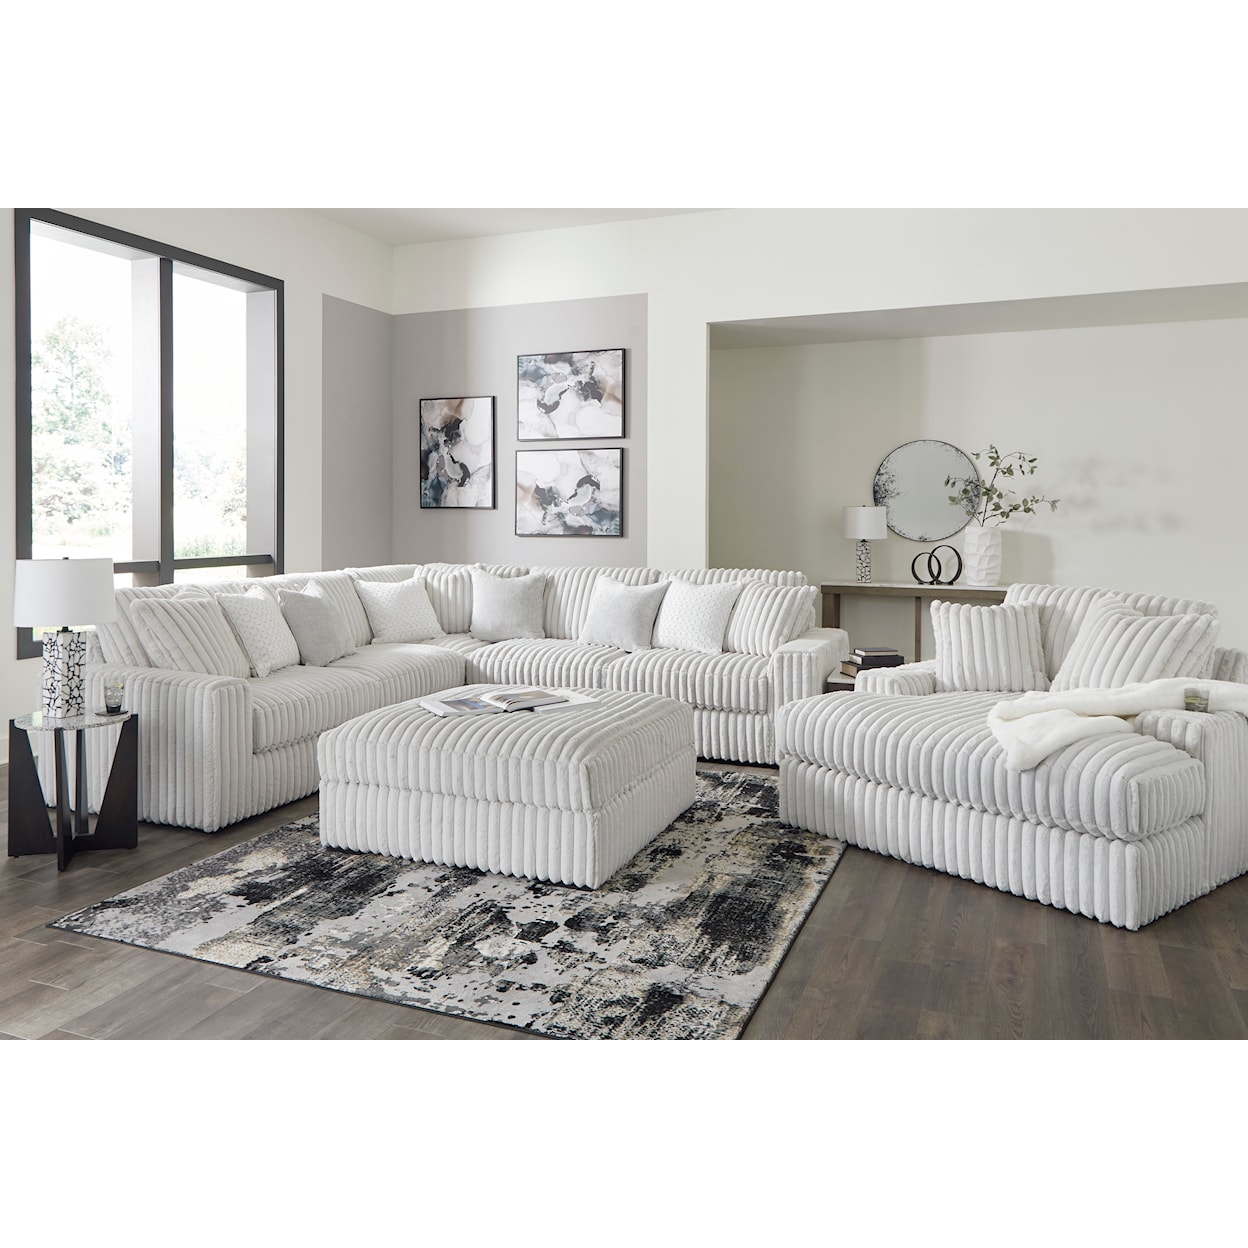 Signature Design by Ashley Furniture Stupendous Living Room Set